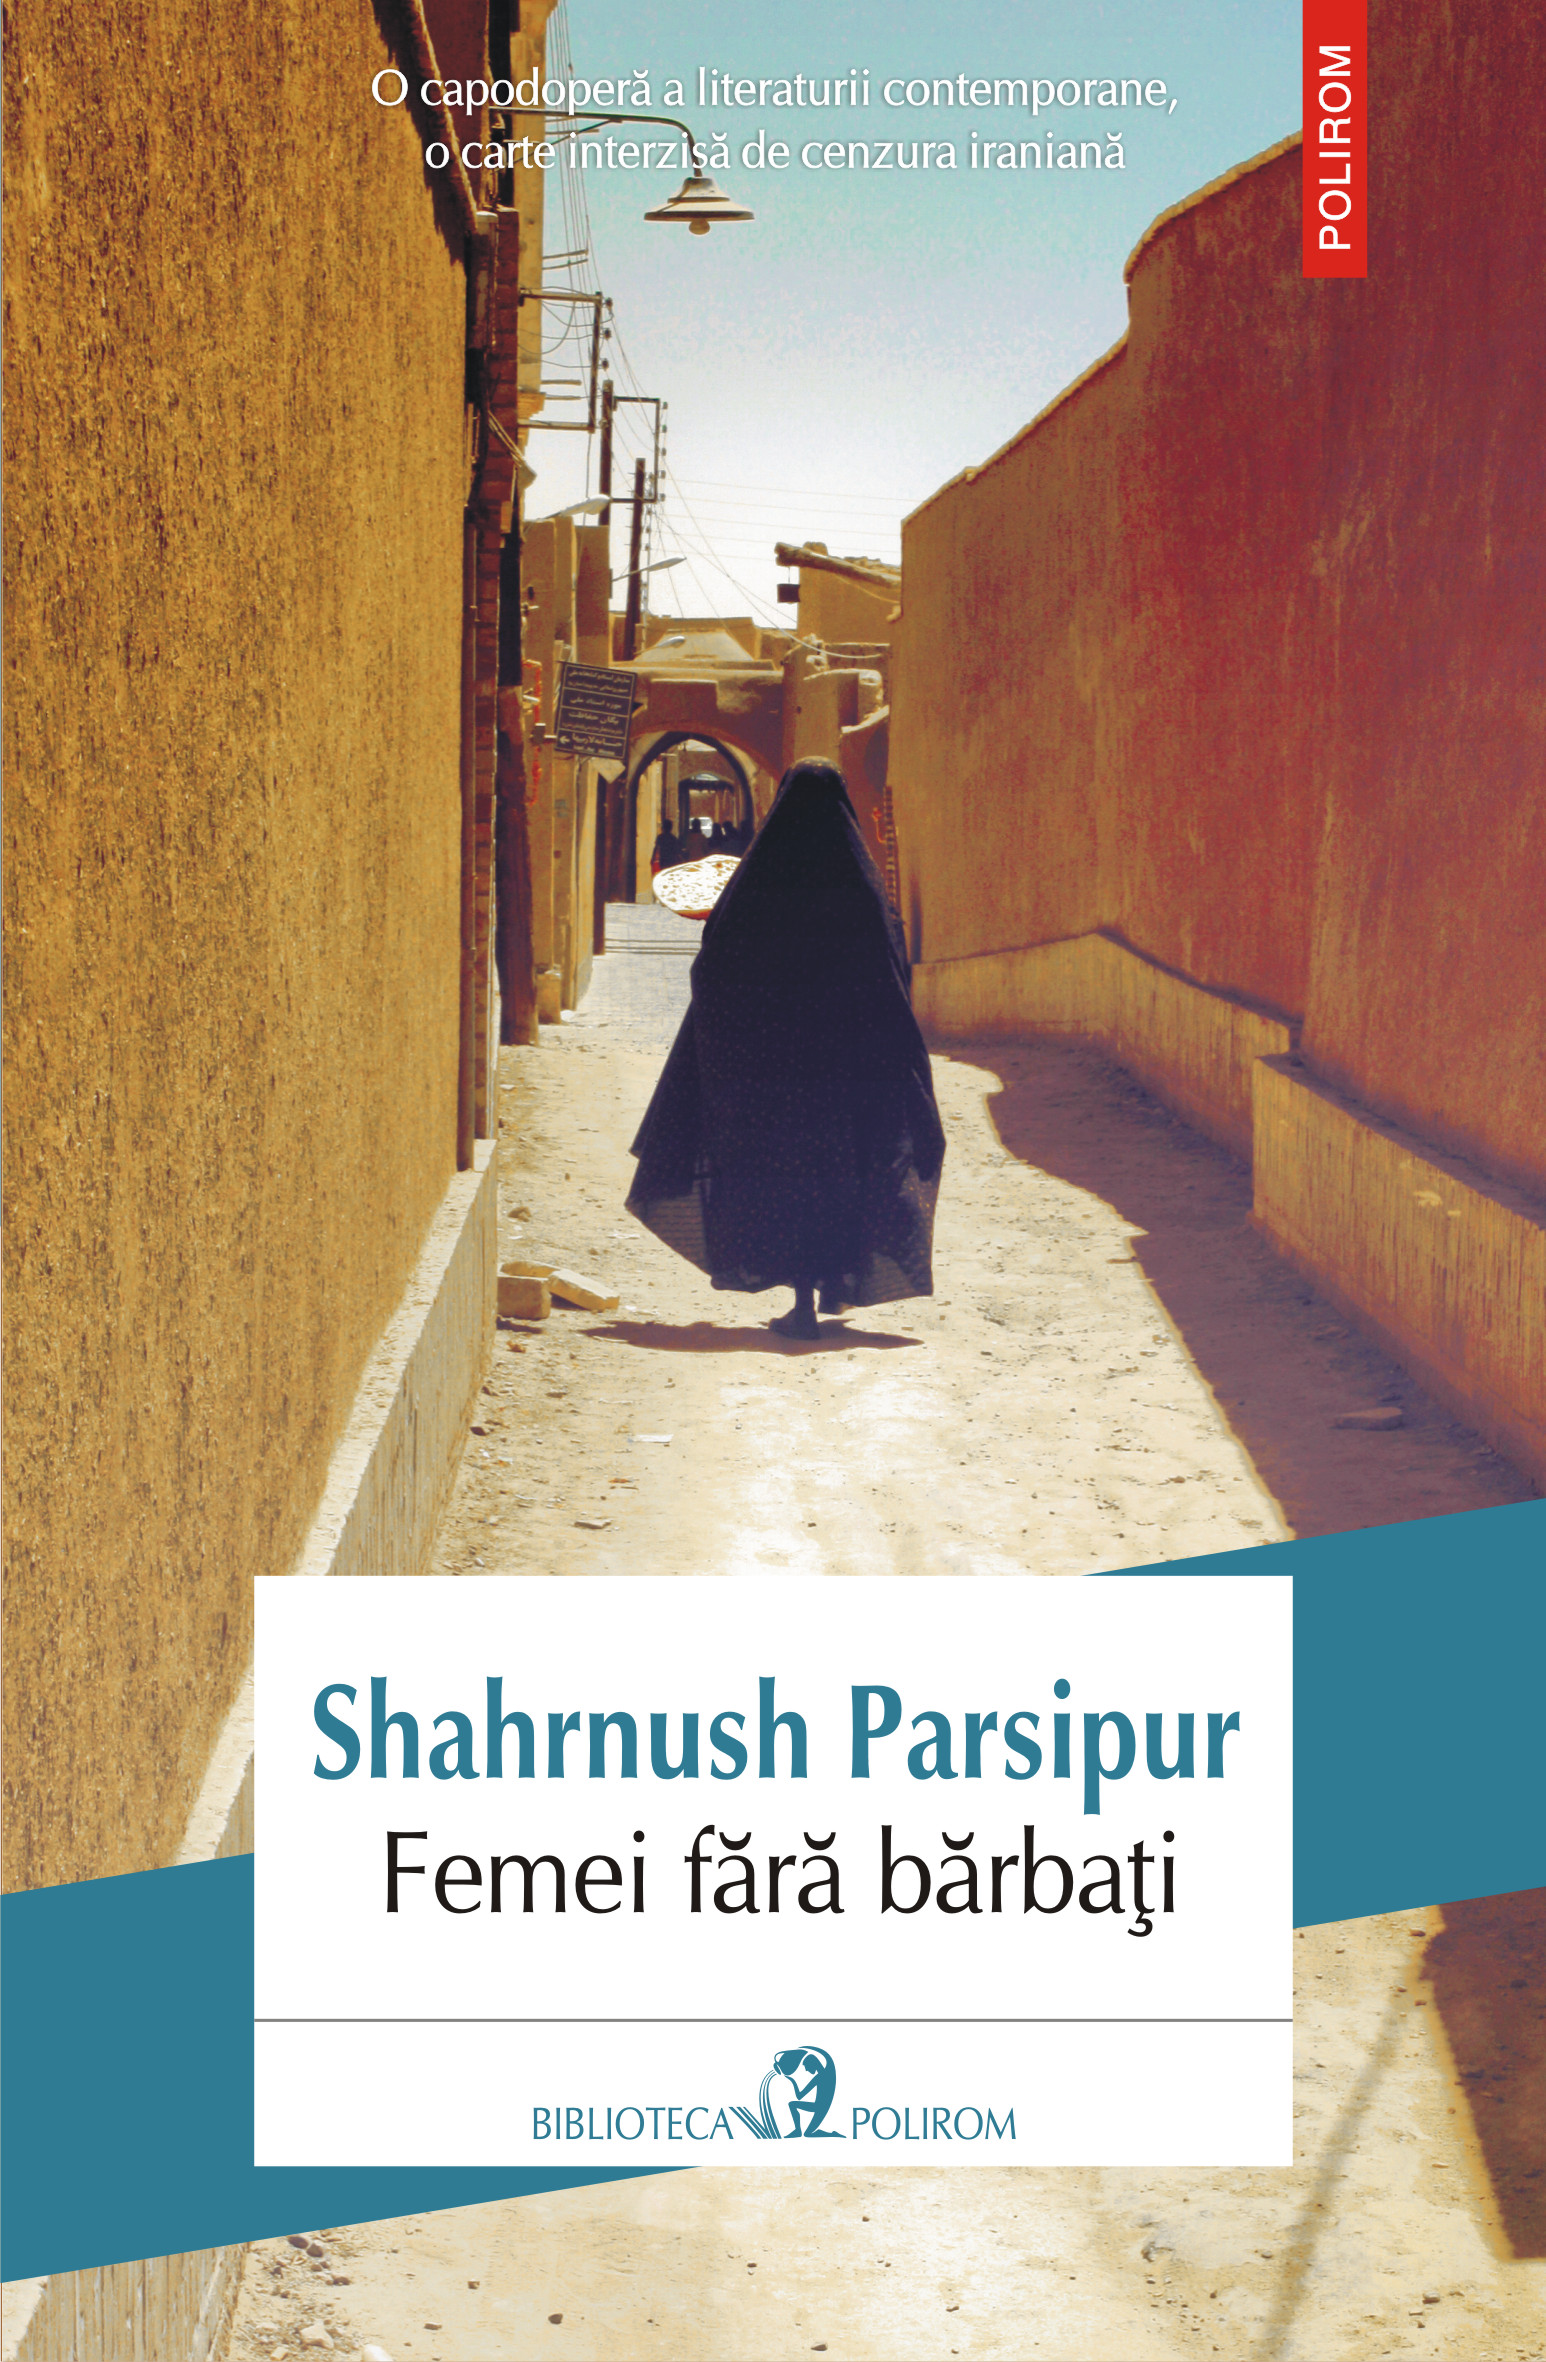 eBook Femei fara barbati - Shahrnush Parsipur